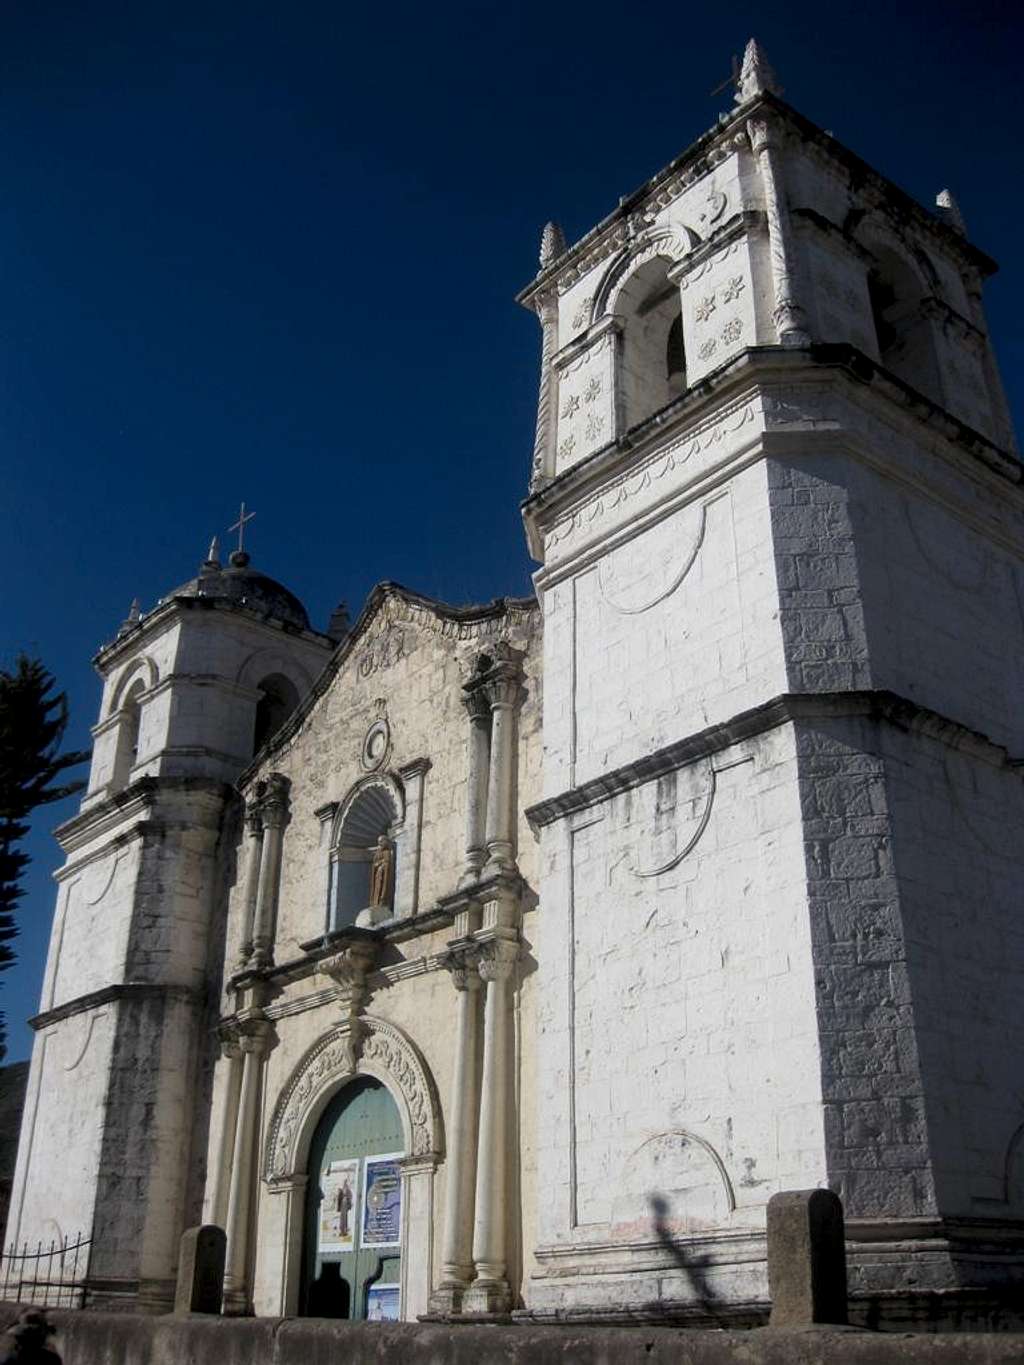 The church of Cabanaconde